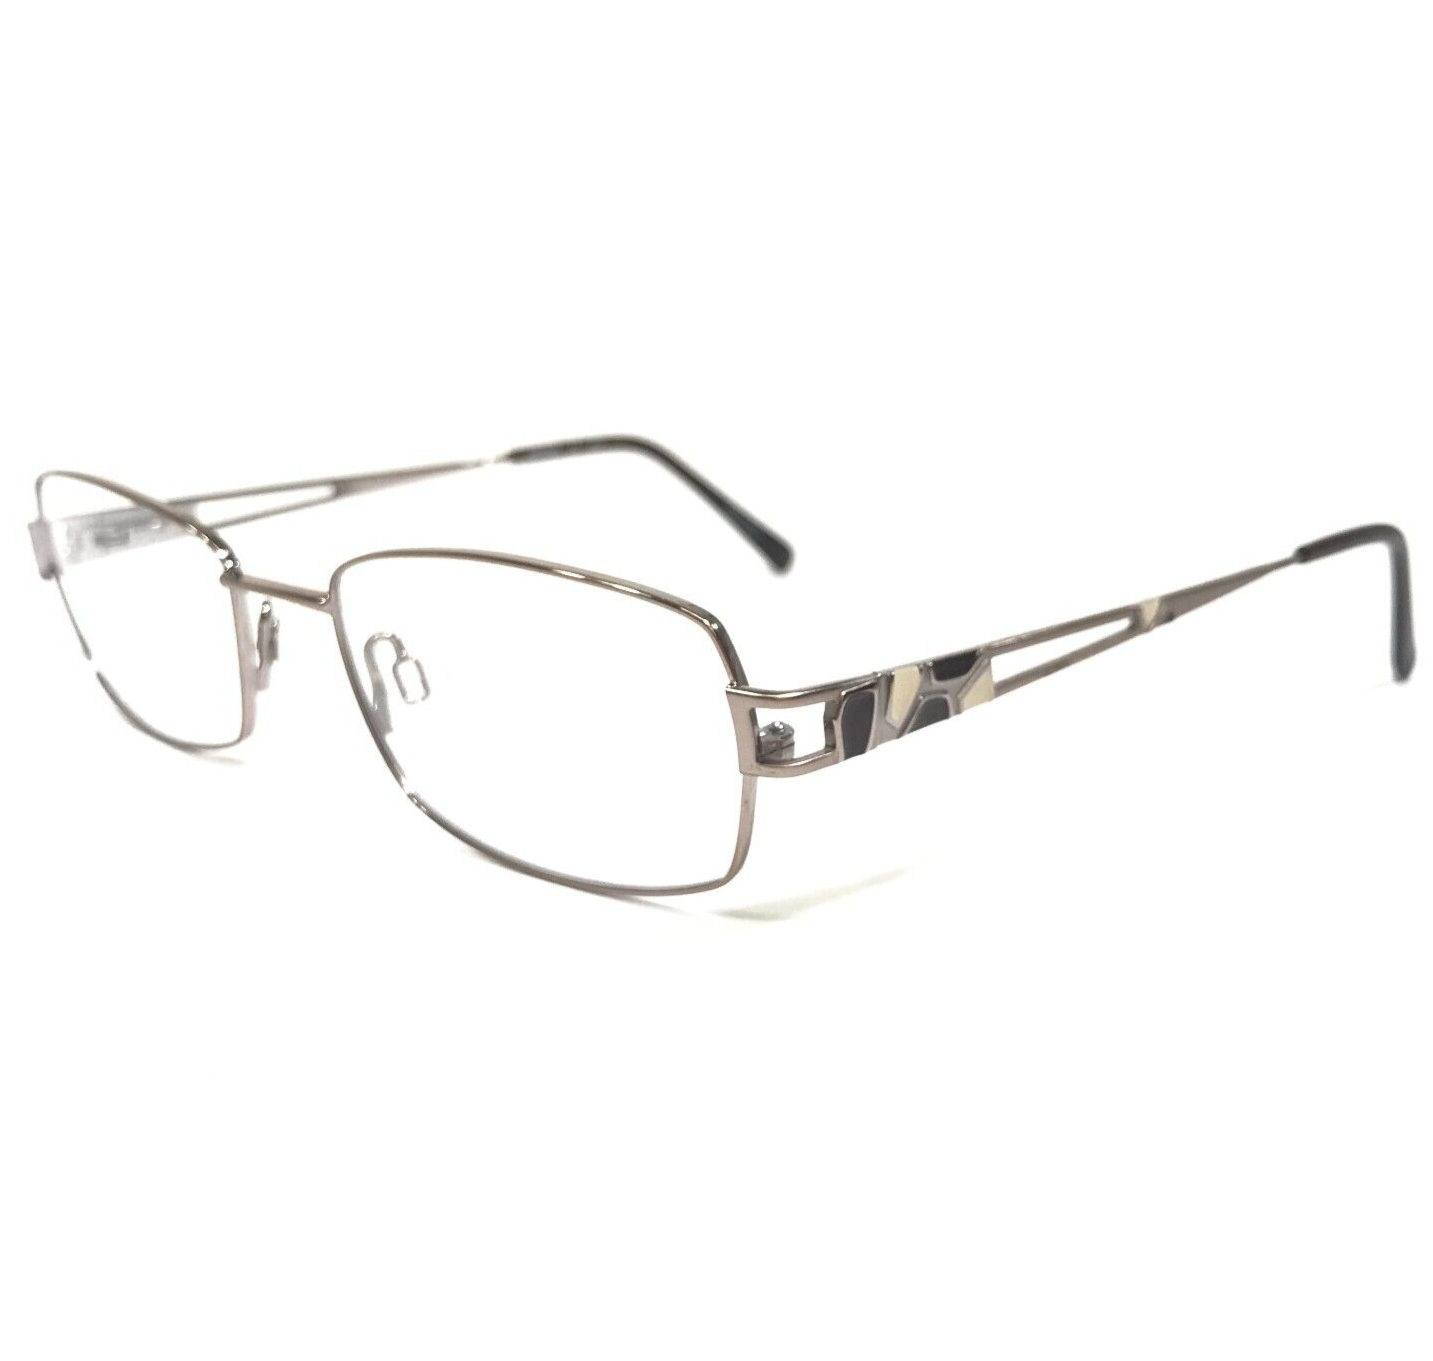 Primary image for Aristar Eyeglasses Frames AR16316 COLOR-573 Brown Silver Rectangular 51-18-140